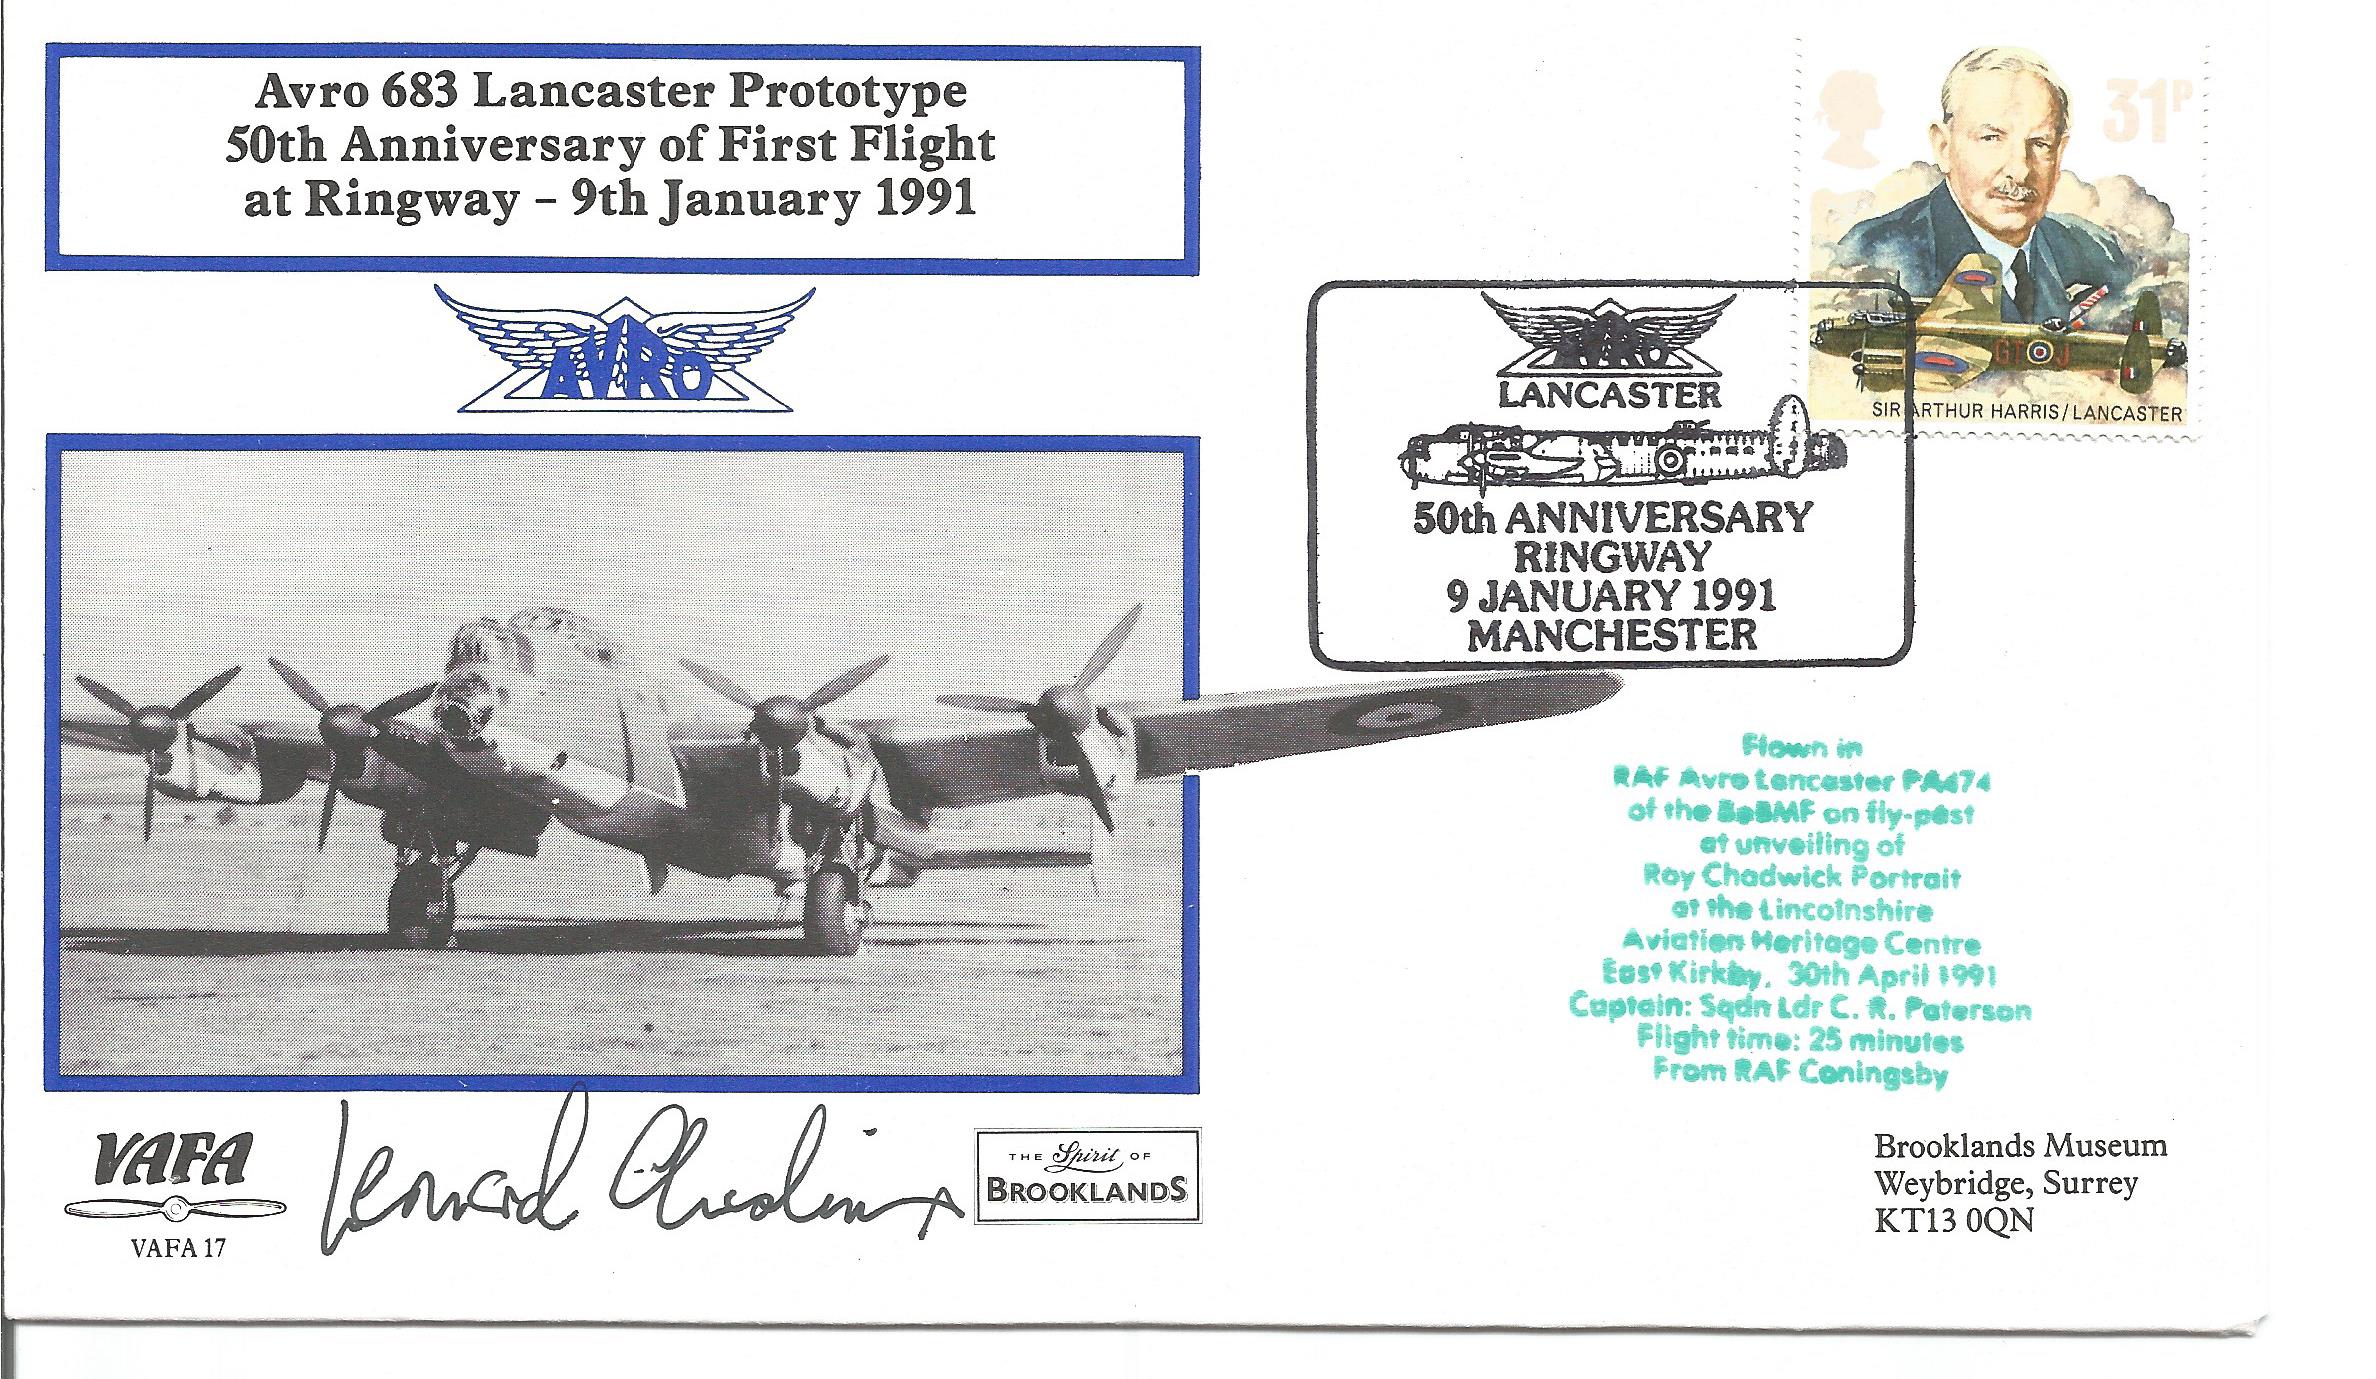 Leonard Cheshire VC 617 Sqn signed VAFA WW2 Lancaster bomber cover, flown on PA474. Good